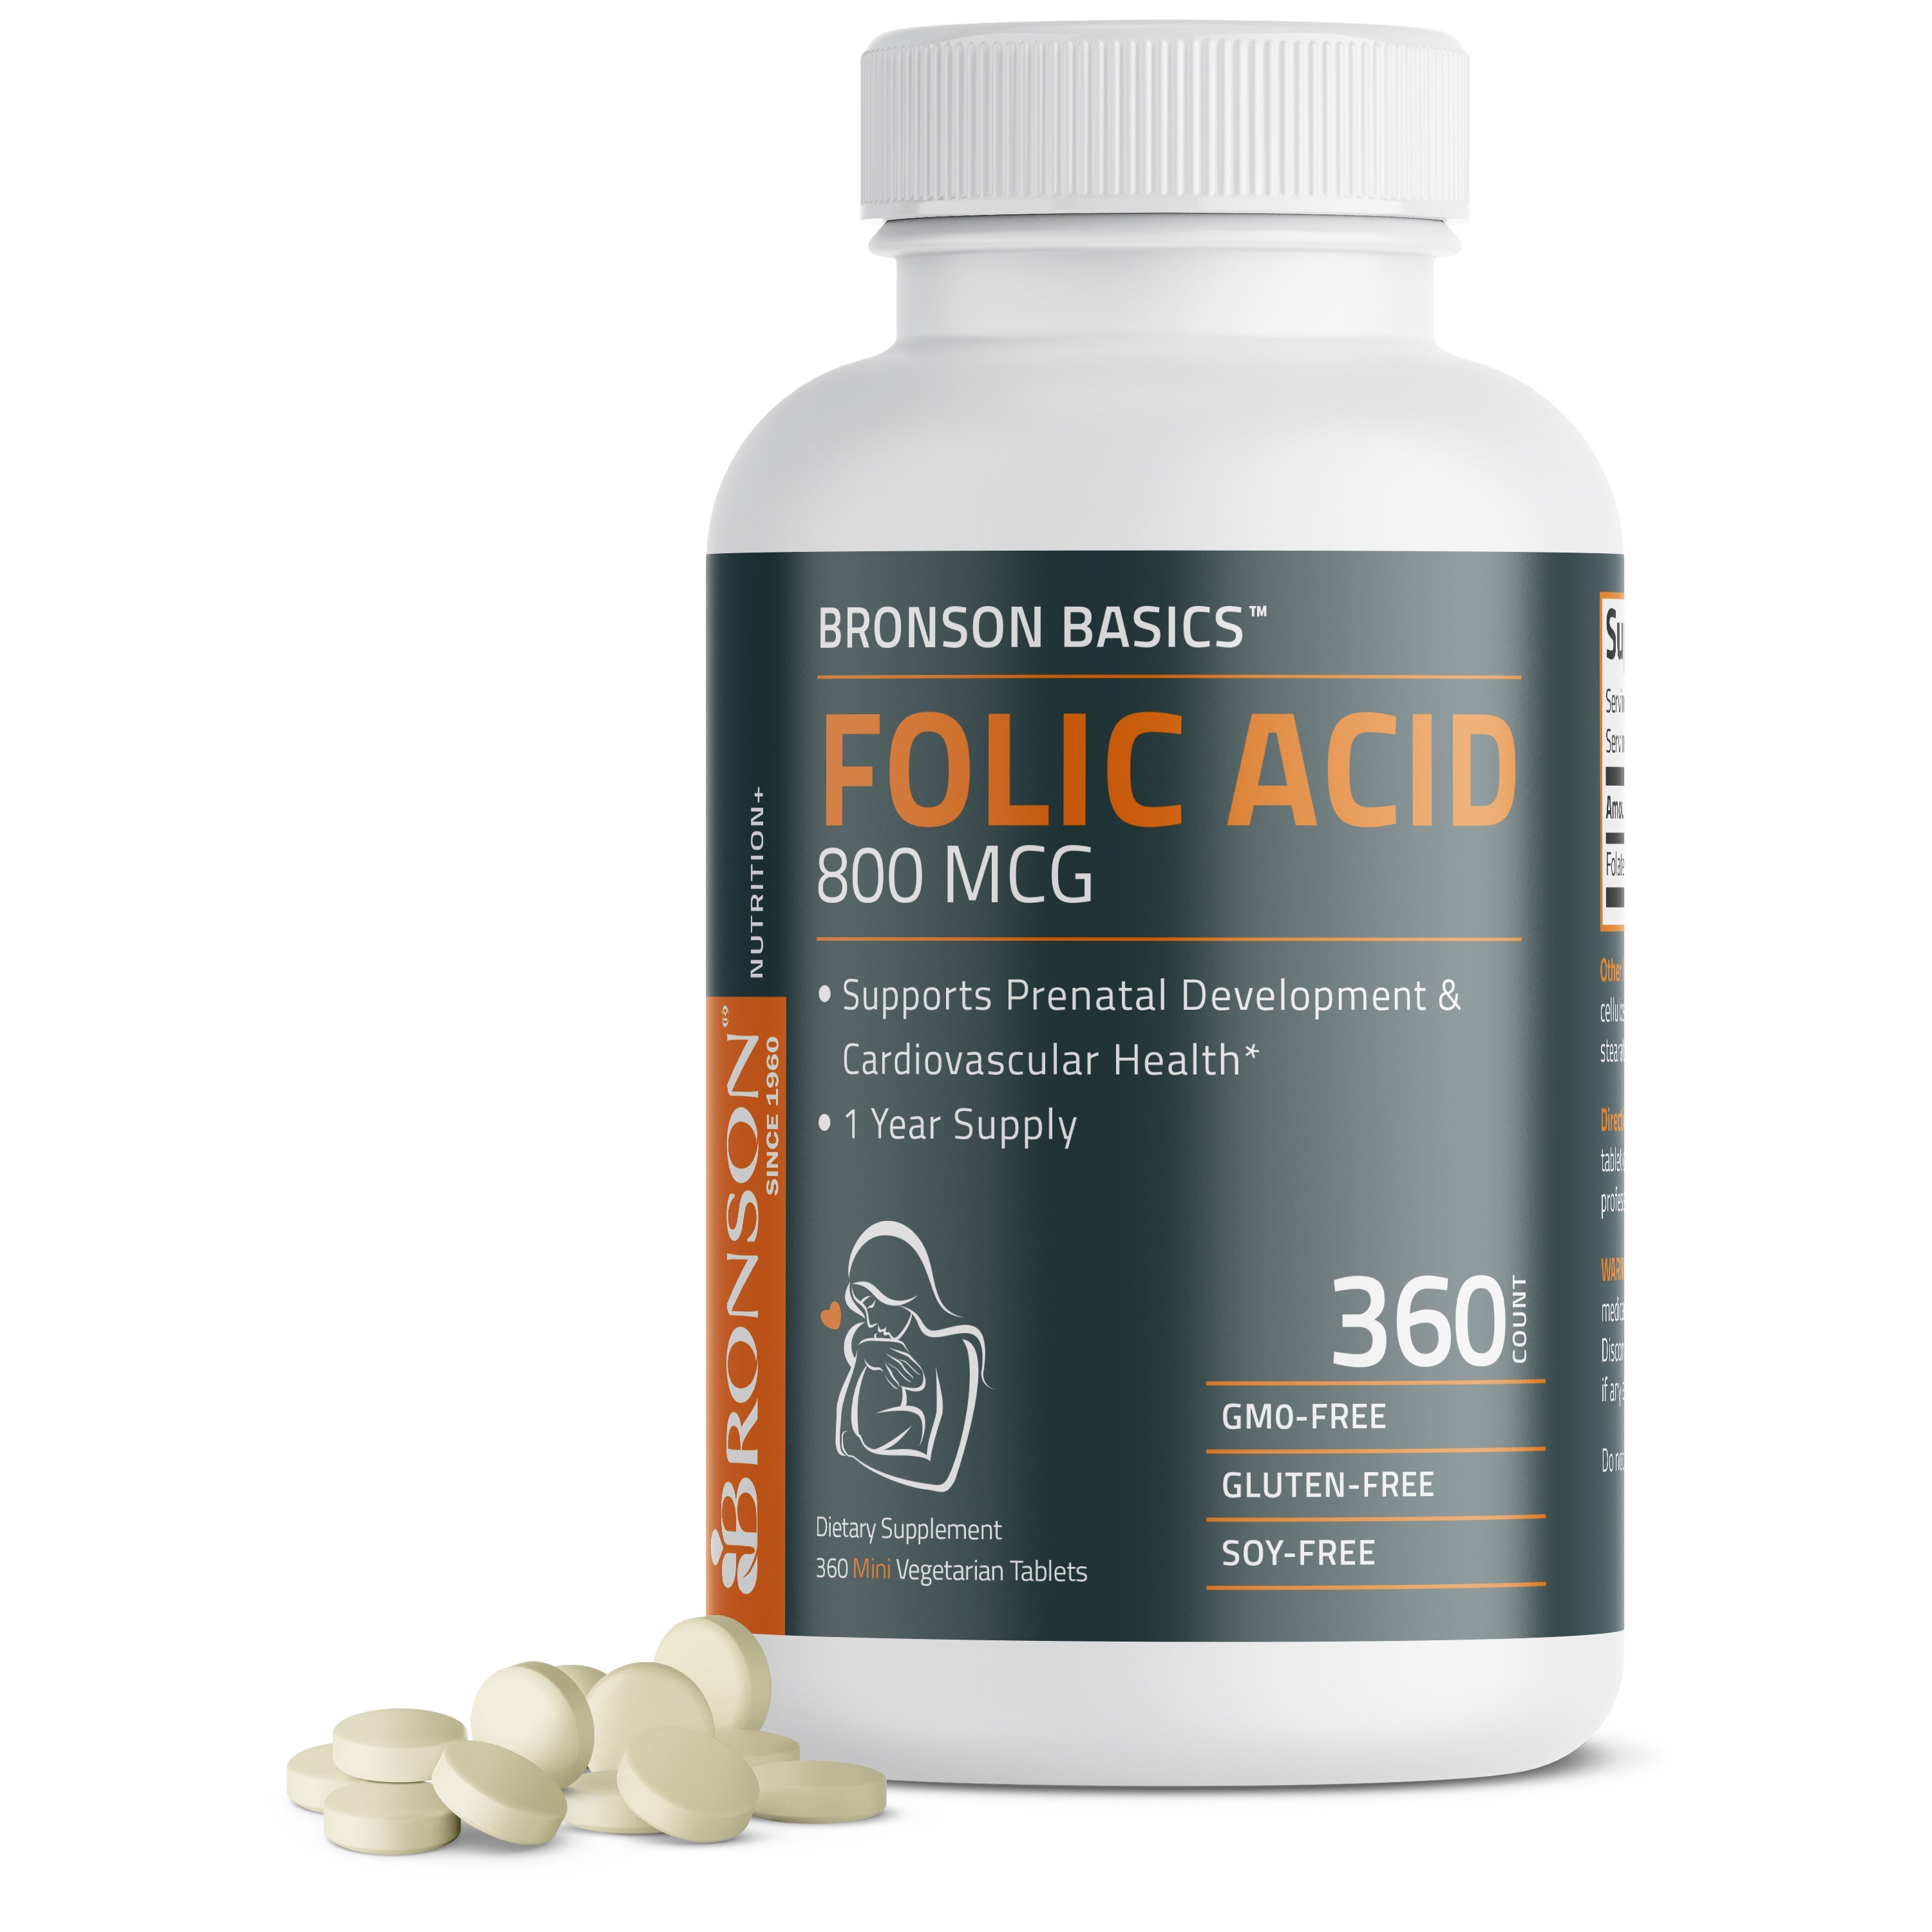 Folic Acid 800 MCG, 360 Tablets view 1 of 6